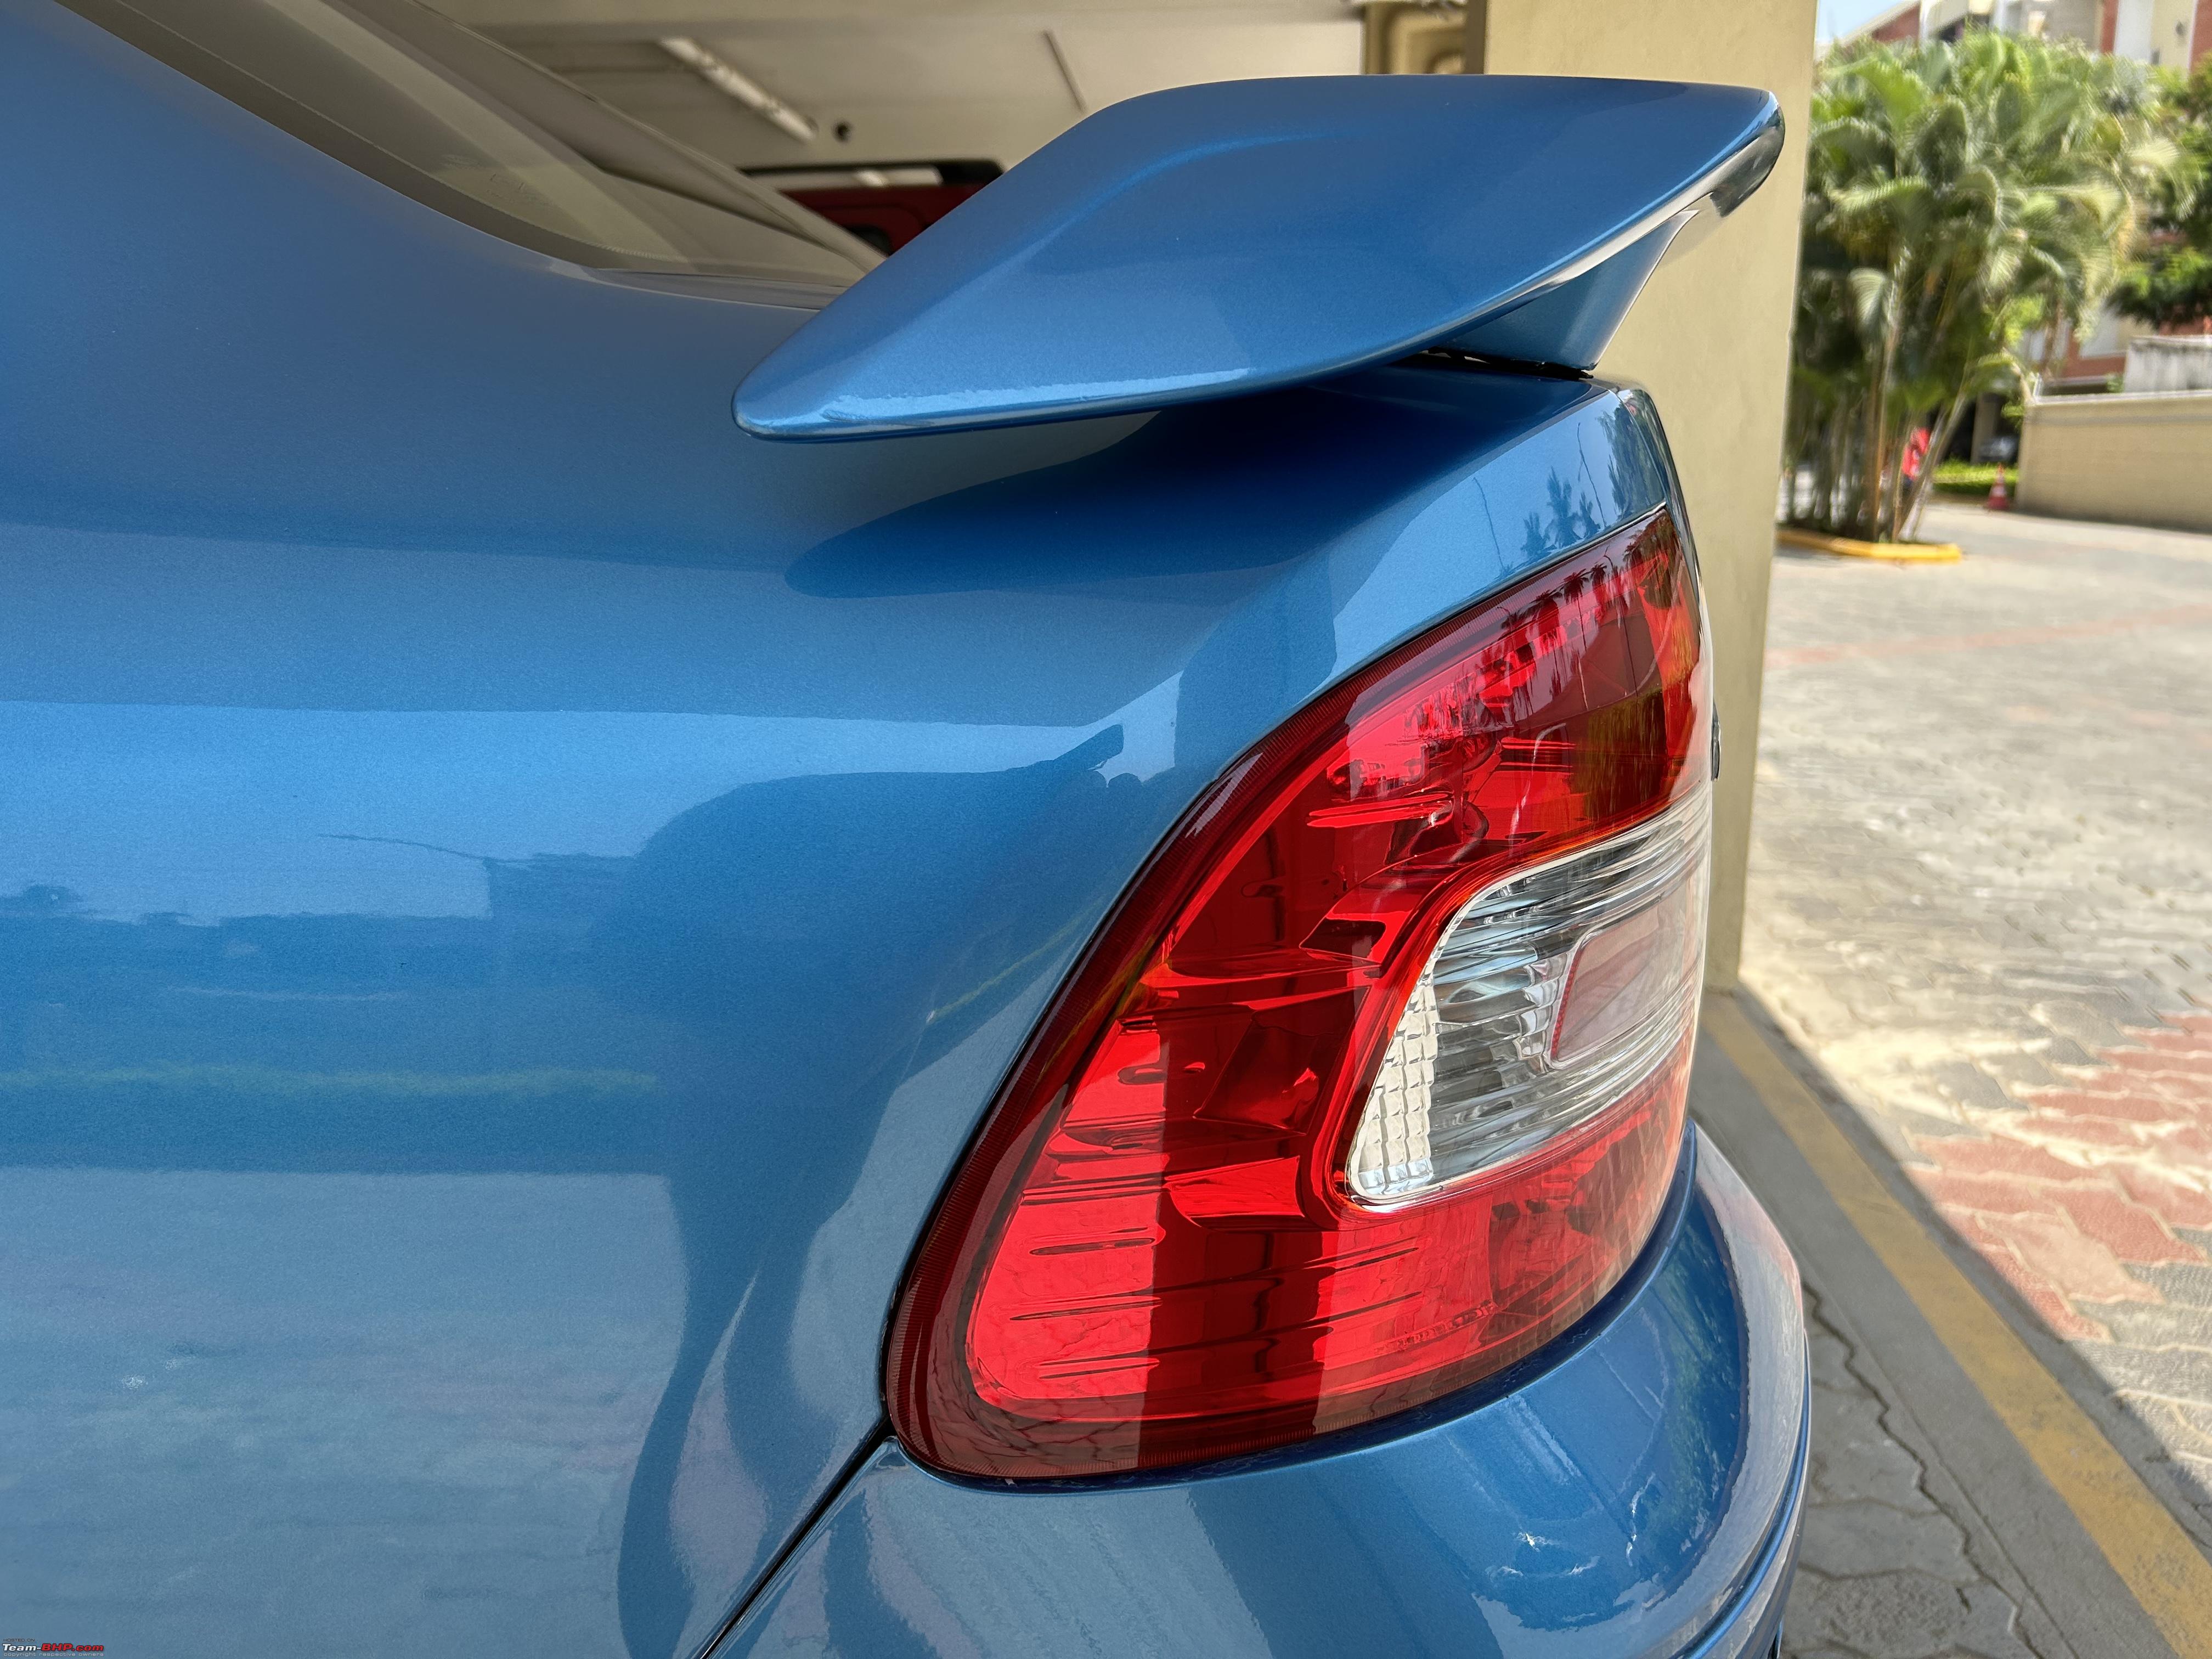 Pre-owned Ford Fiesta 1.6S Aquarius Blue